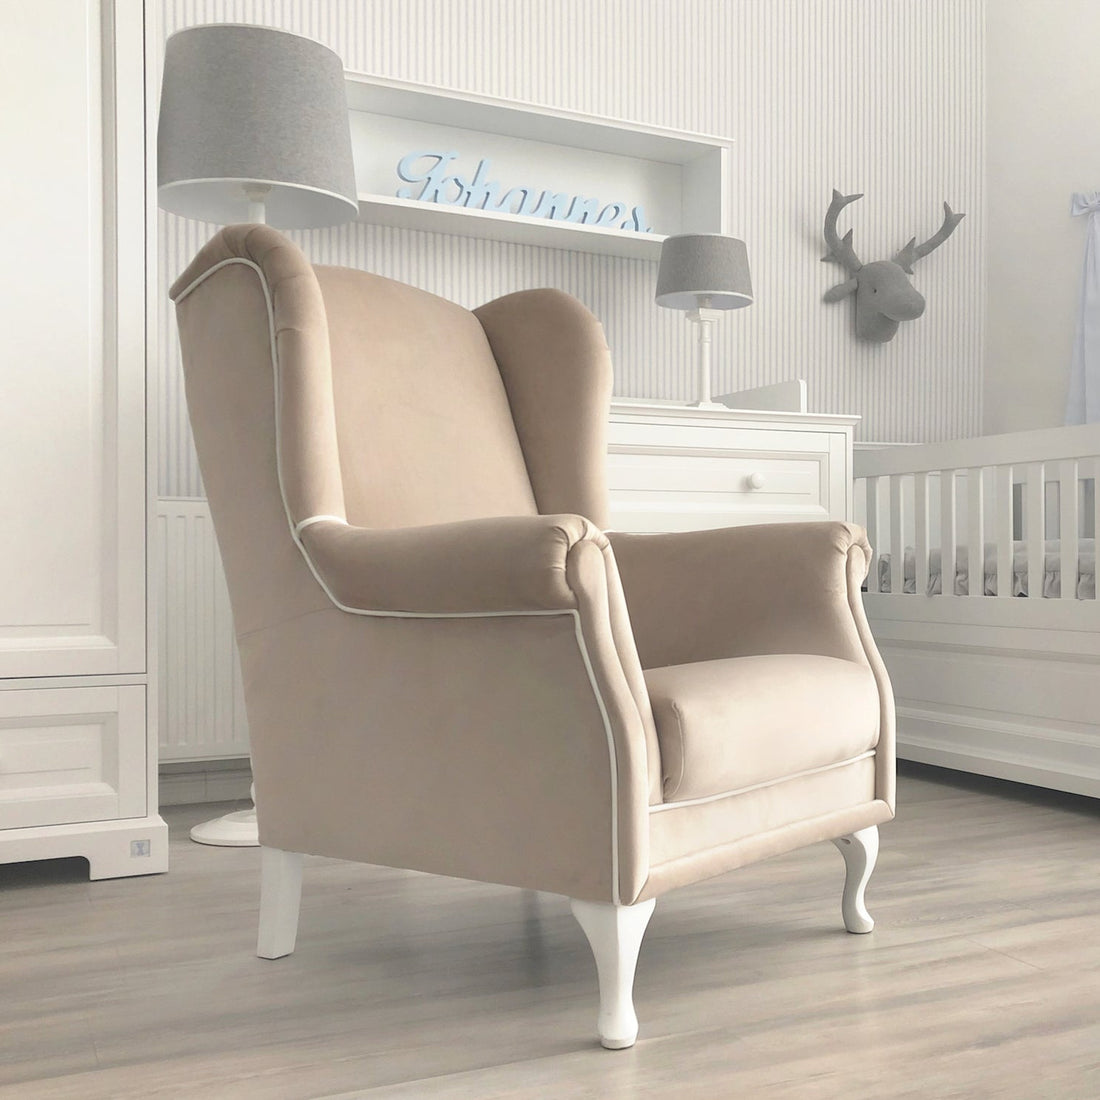 Nursing chair PRESTIGE sand beige | handcrafted nursing chair | luxury baby furniture | relaxing nursing chair